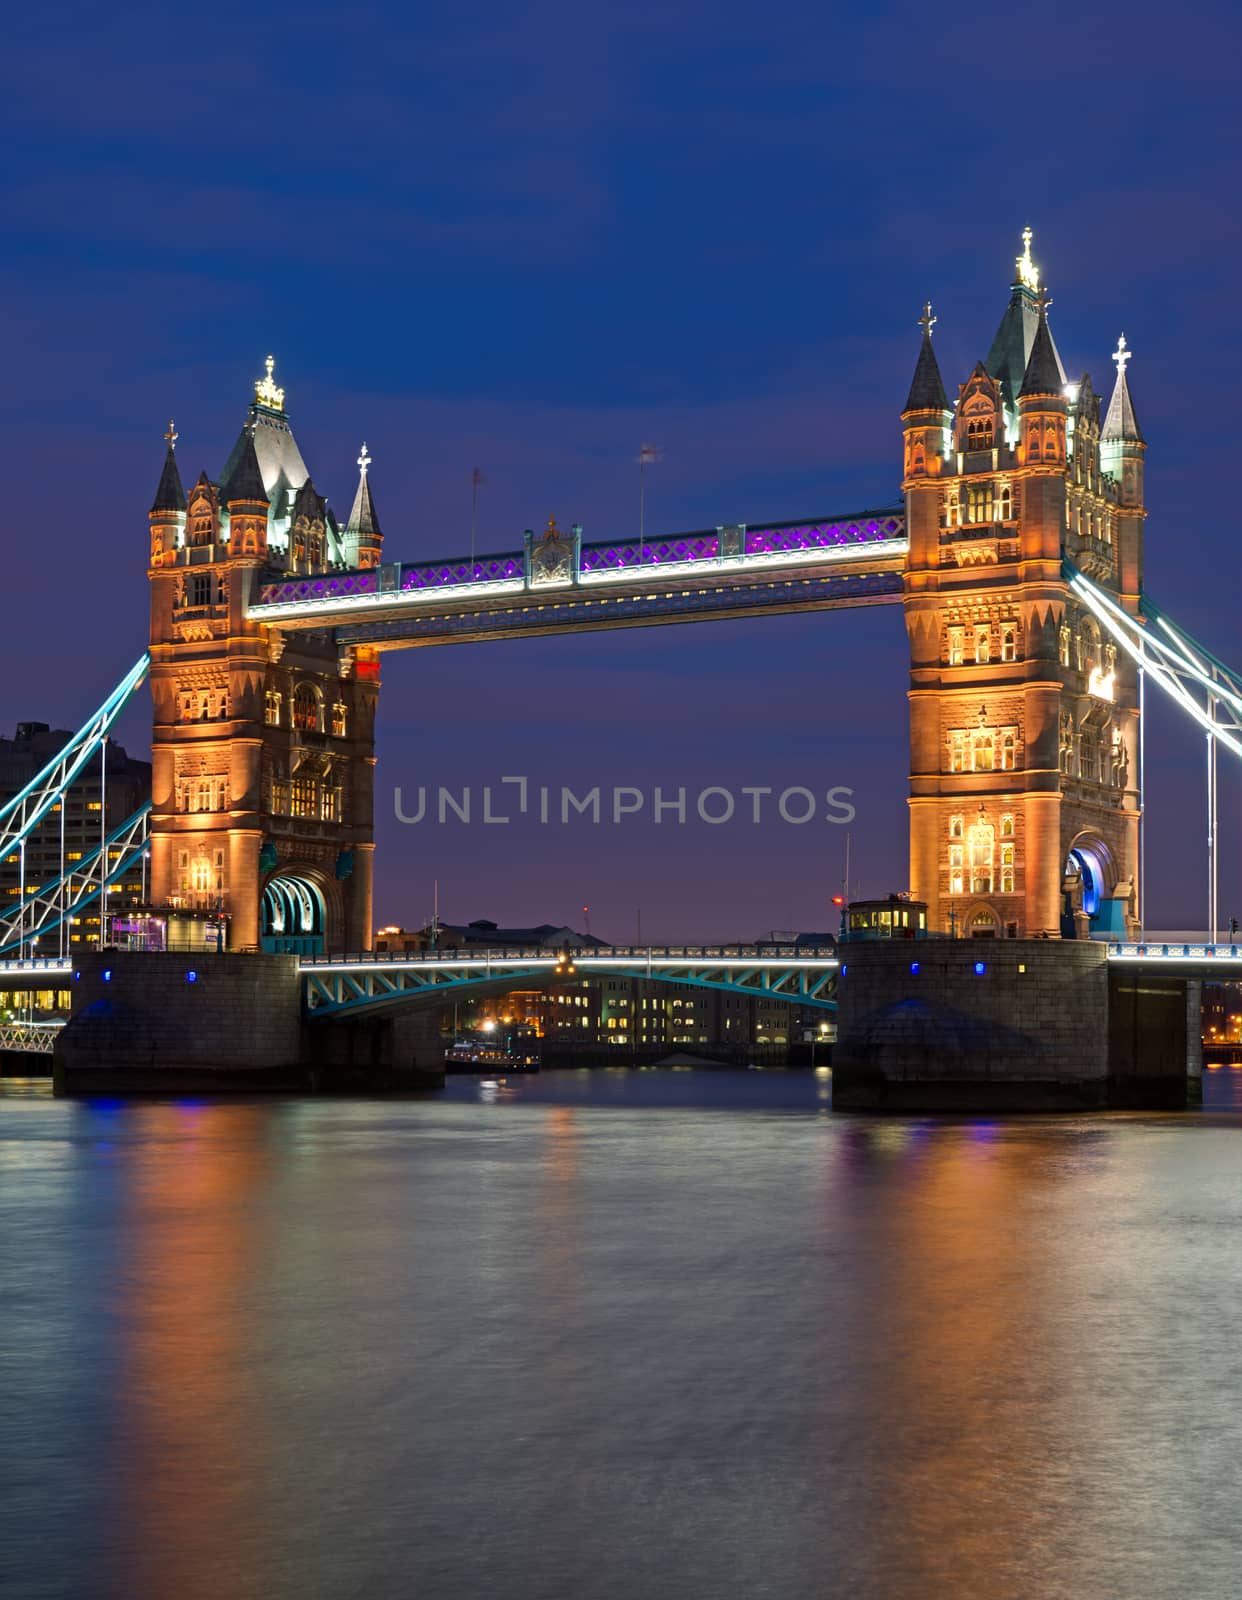 The illuminated Tower Bridge in London after sunset